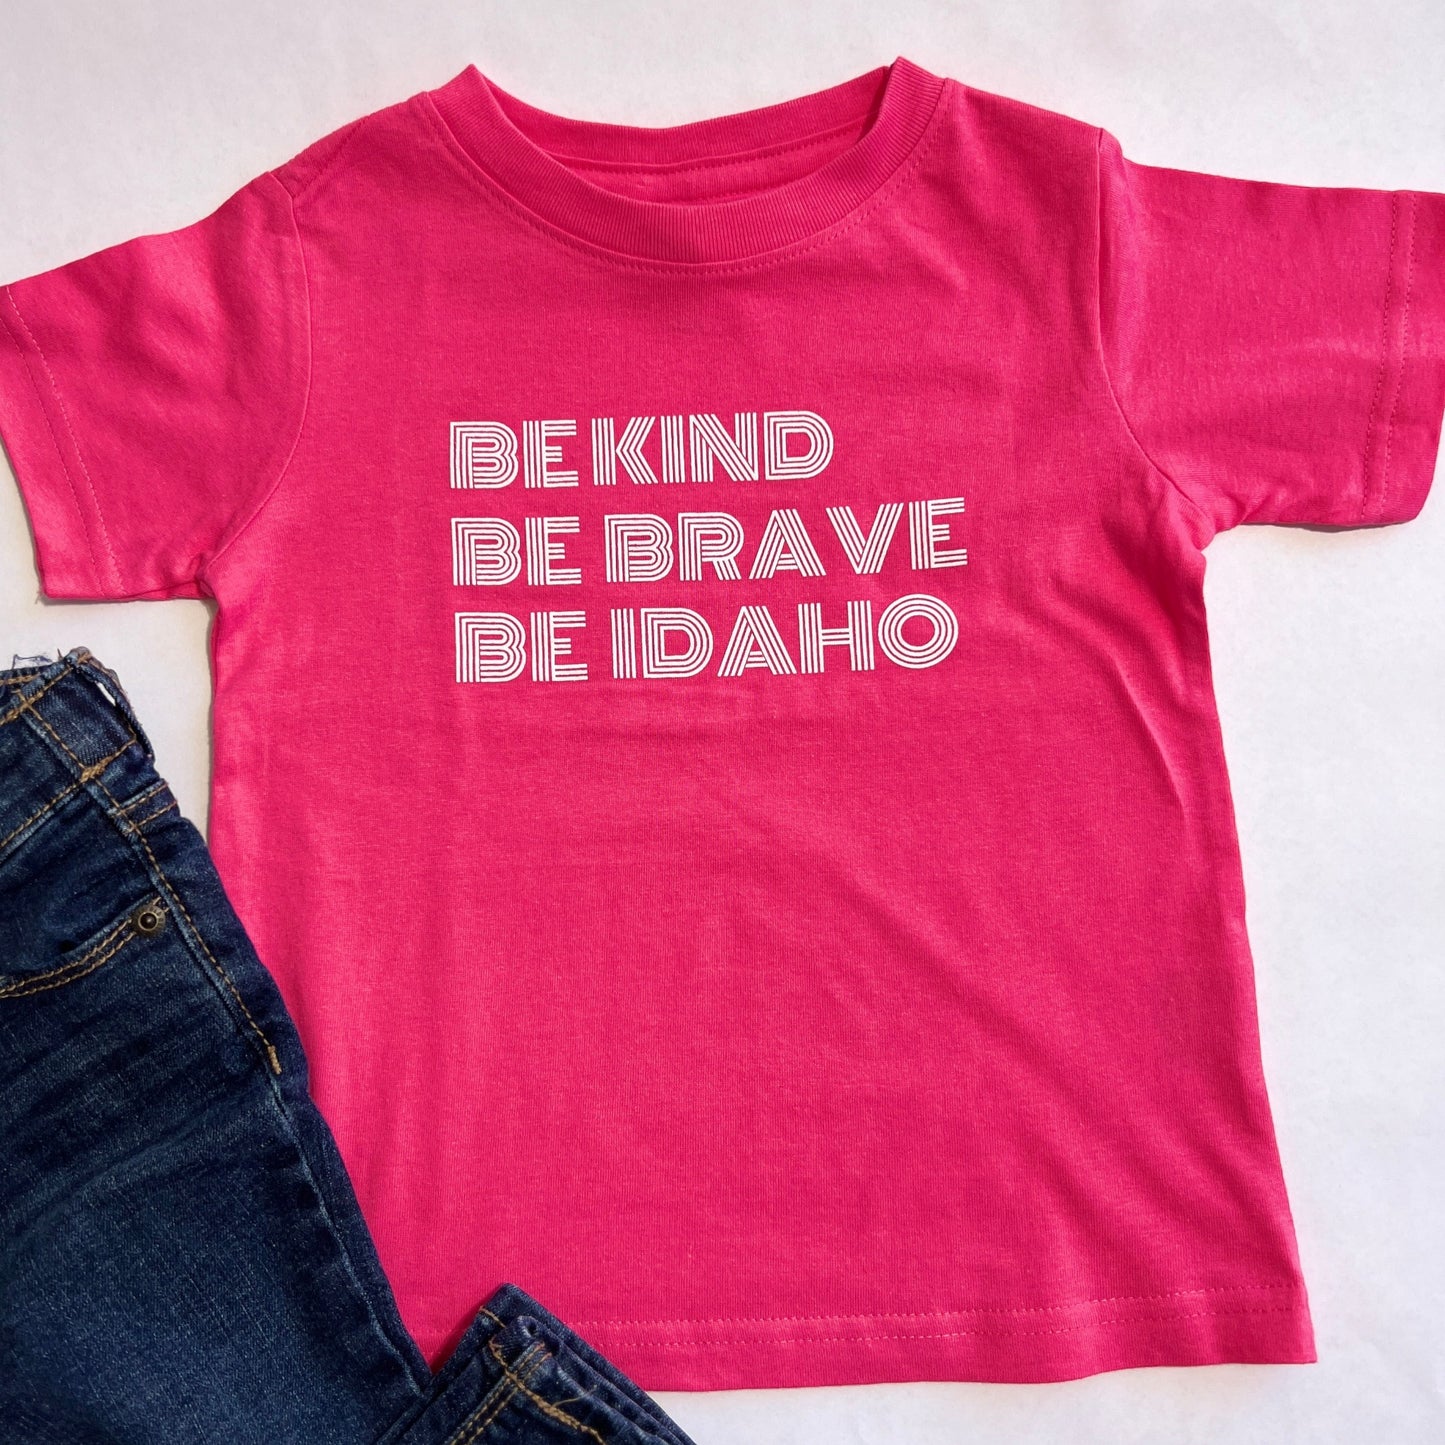 This Idaho T shirt is made for Idaho. It's focus is to bring joy and bravery to idaho Kids. Idaho apparel company, TatorJo, designs this shirt and screen prints right here in Idaho.